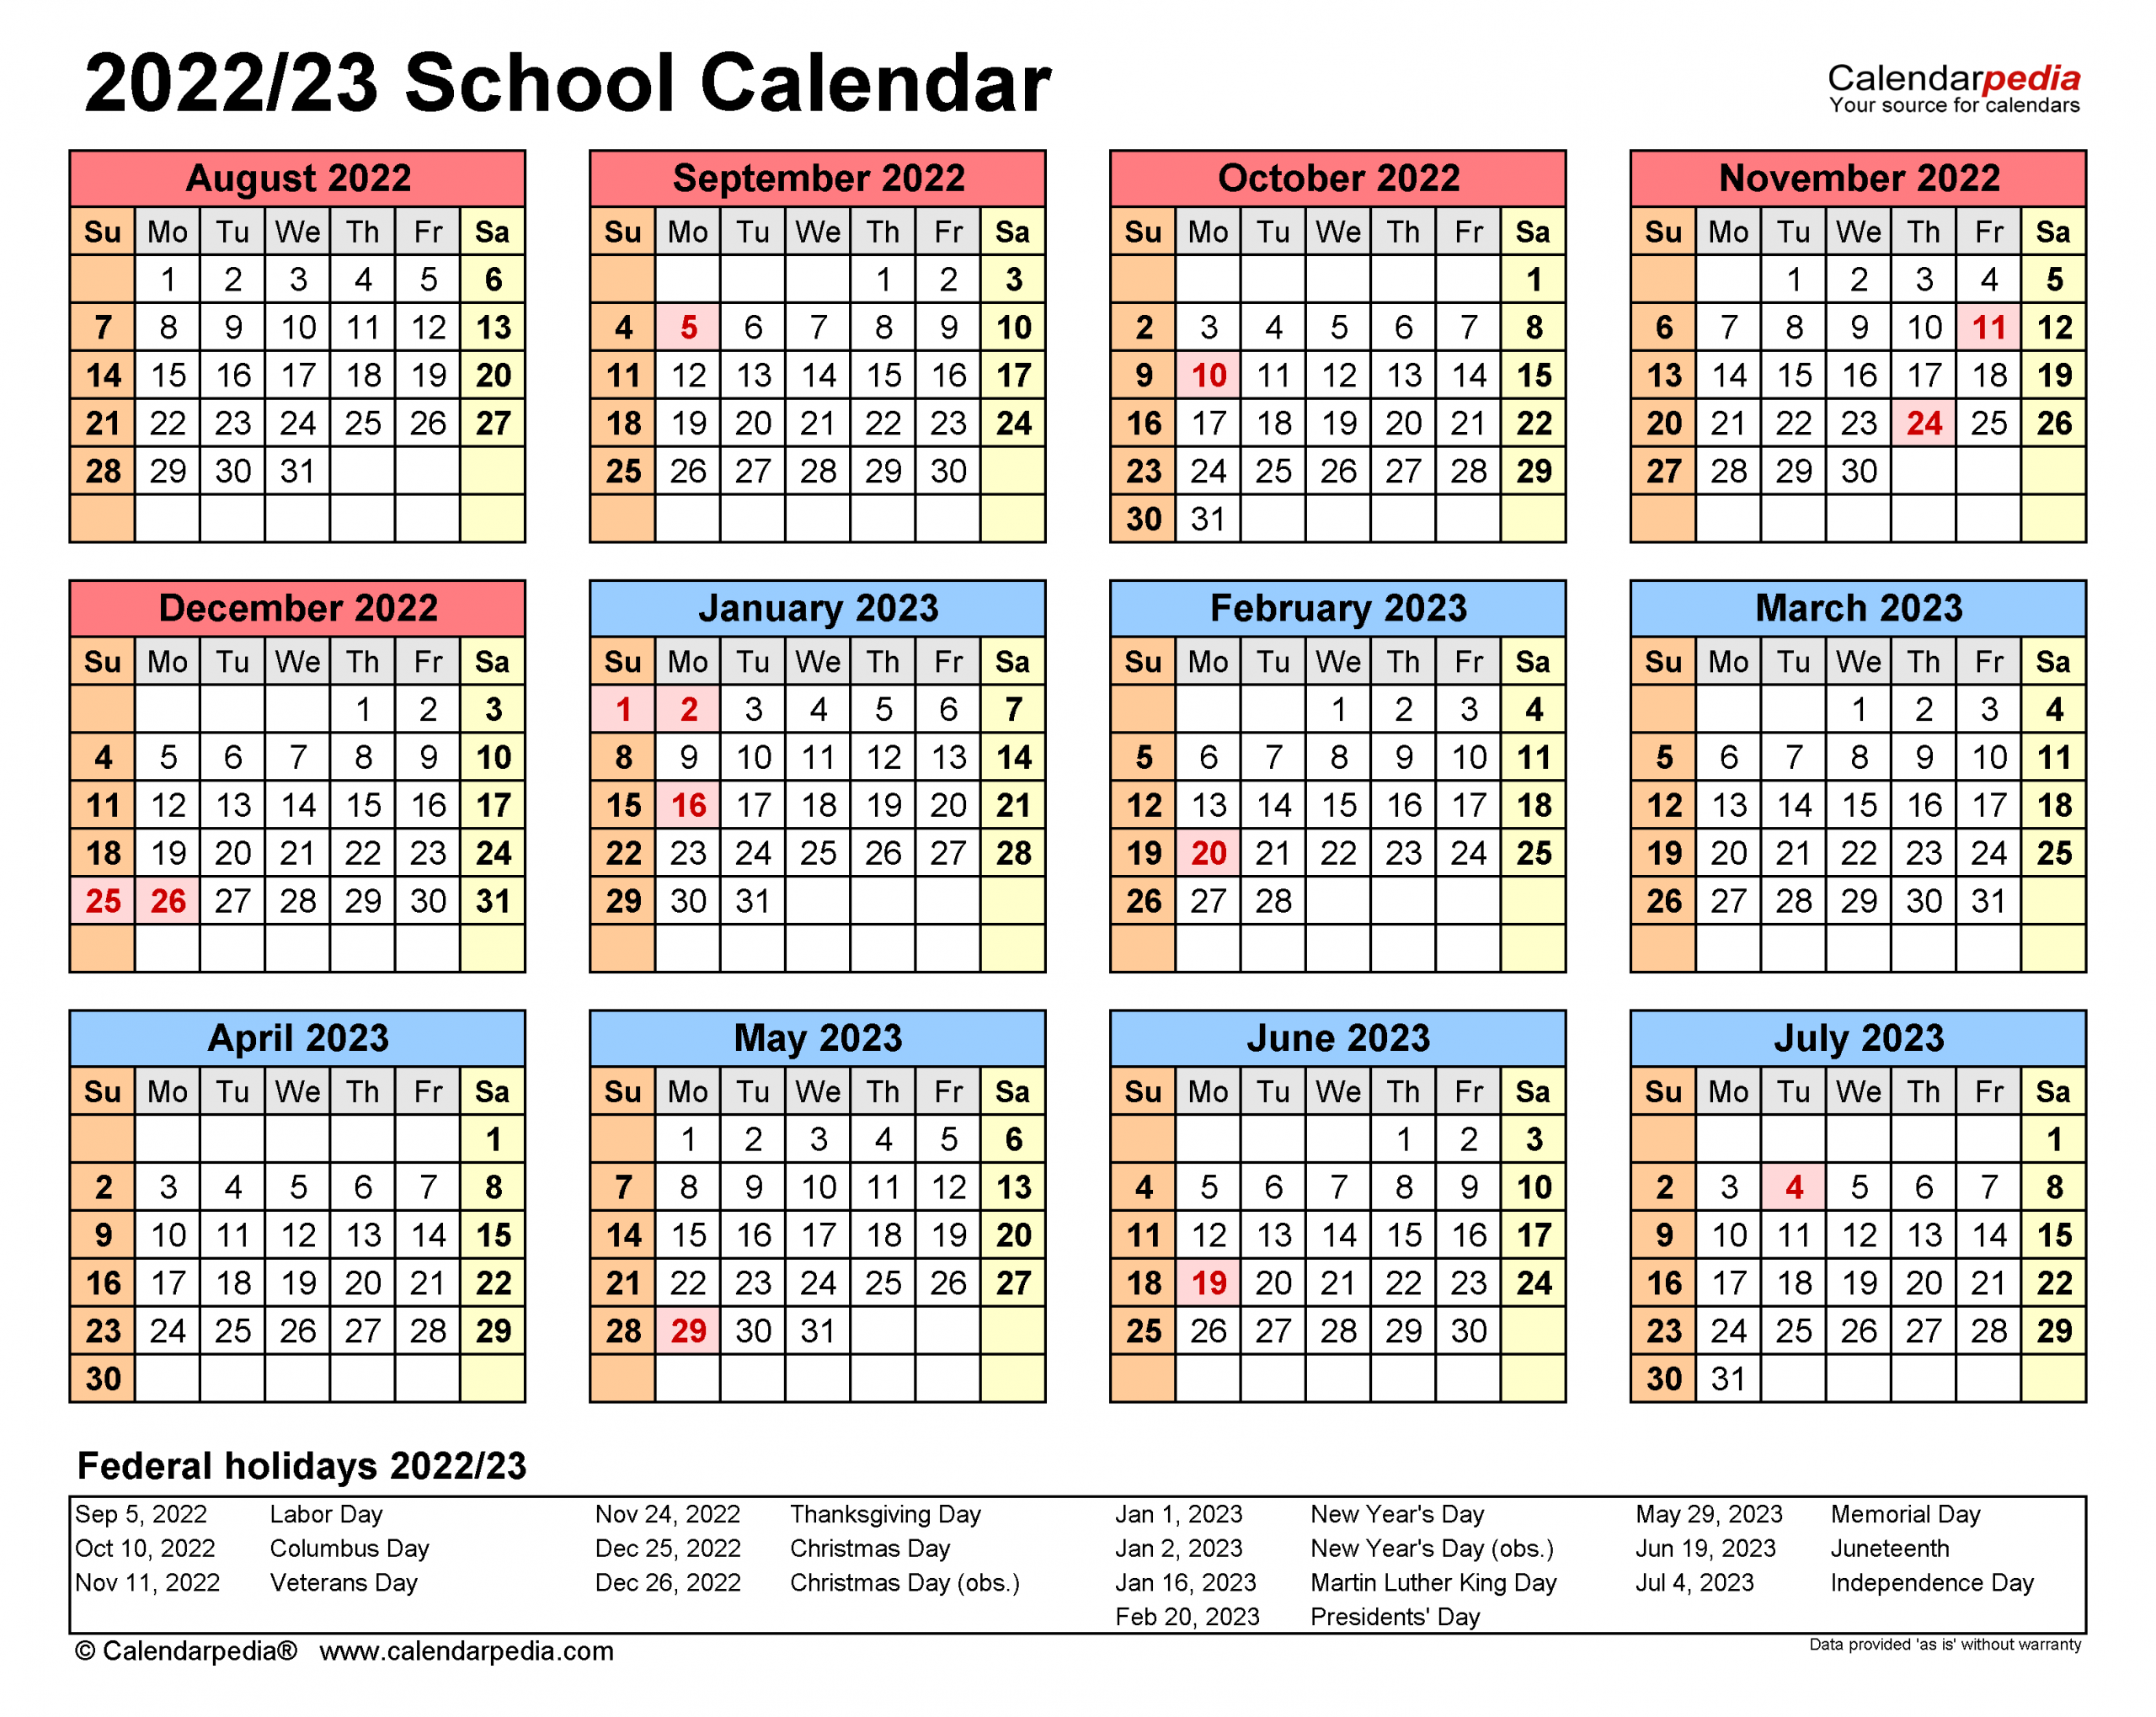 Chesapeake Public Schools Calendar 2022-2023 - February